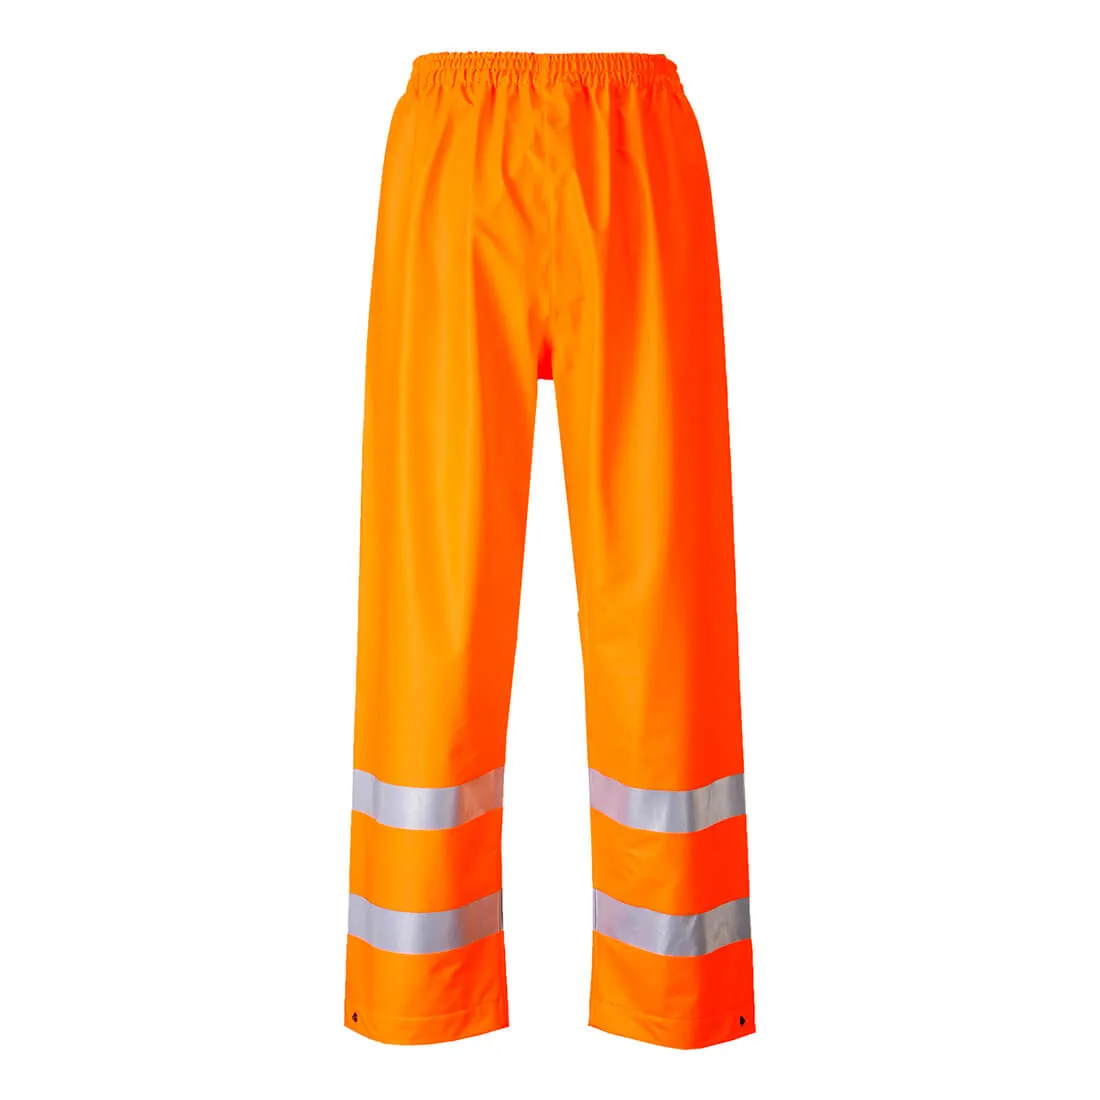 Sealtex Flame Resistant Hi Vis Trousers - Orange, 2XL